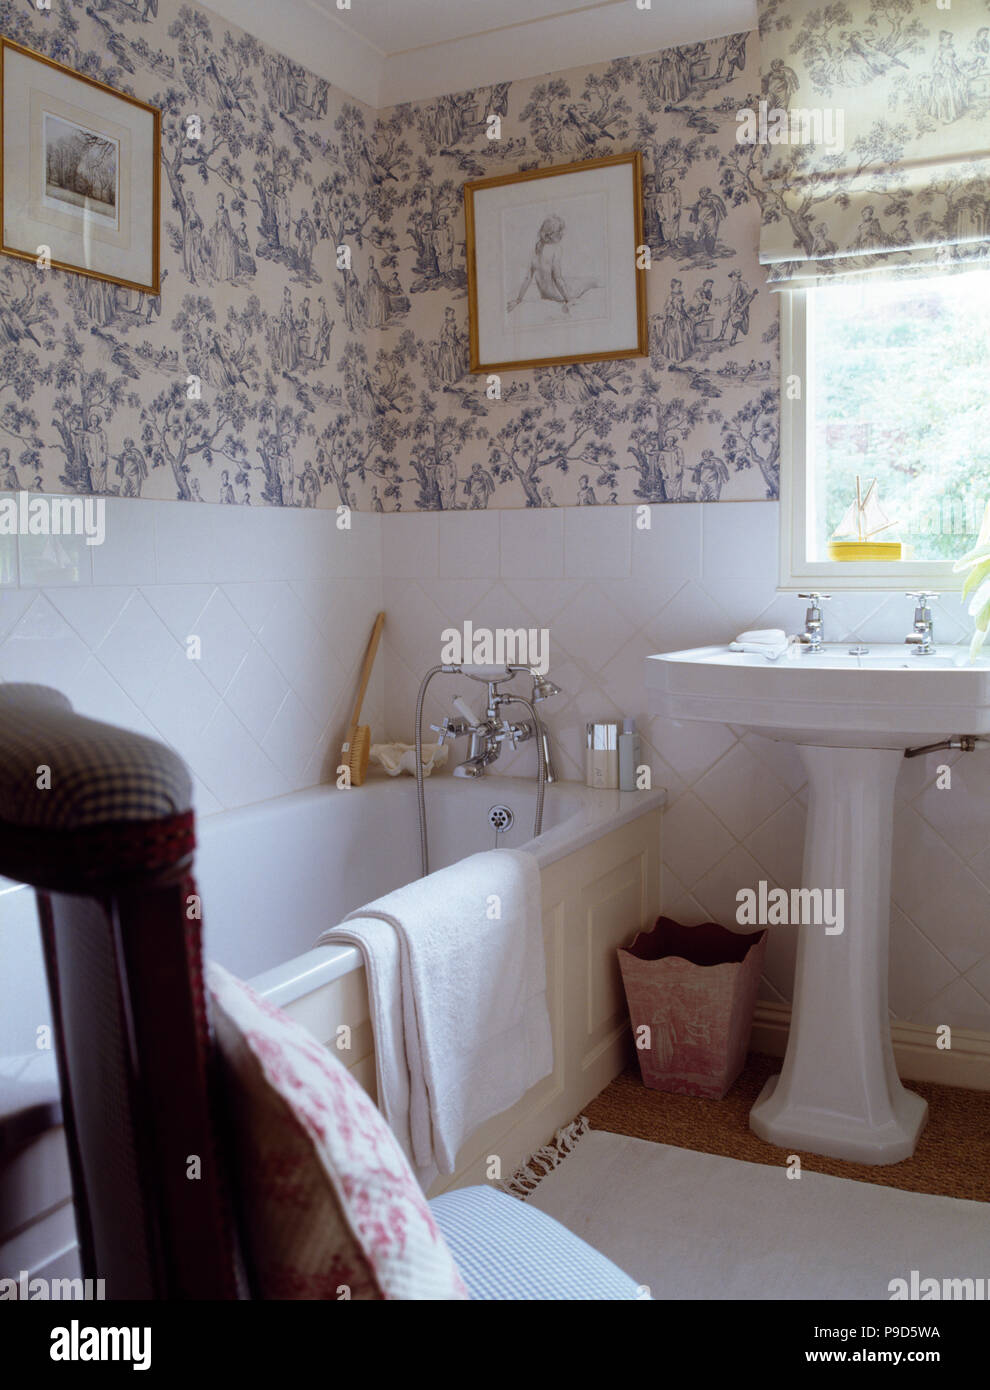 Toile de Jouy wallpaper in bathroom with a white pedestal basin below the window Stock Photo